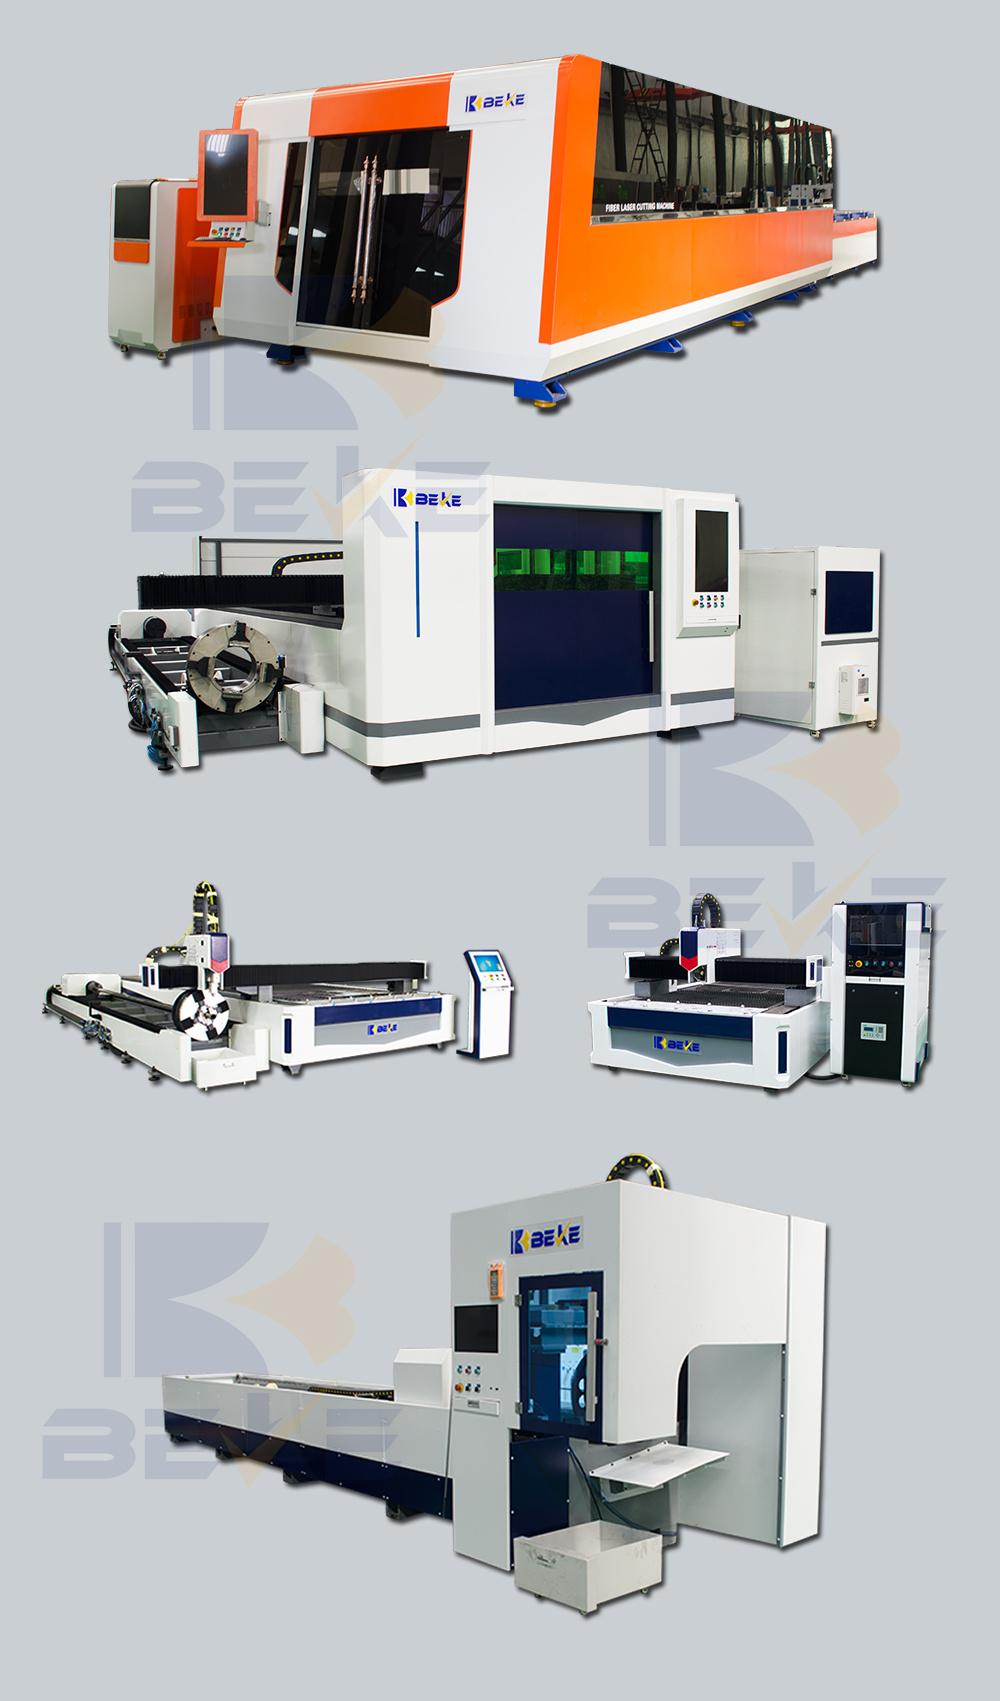 Bk3015 3000W Ss Plate Fiber CNC Laser Cutting Machine Factory Outlet